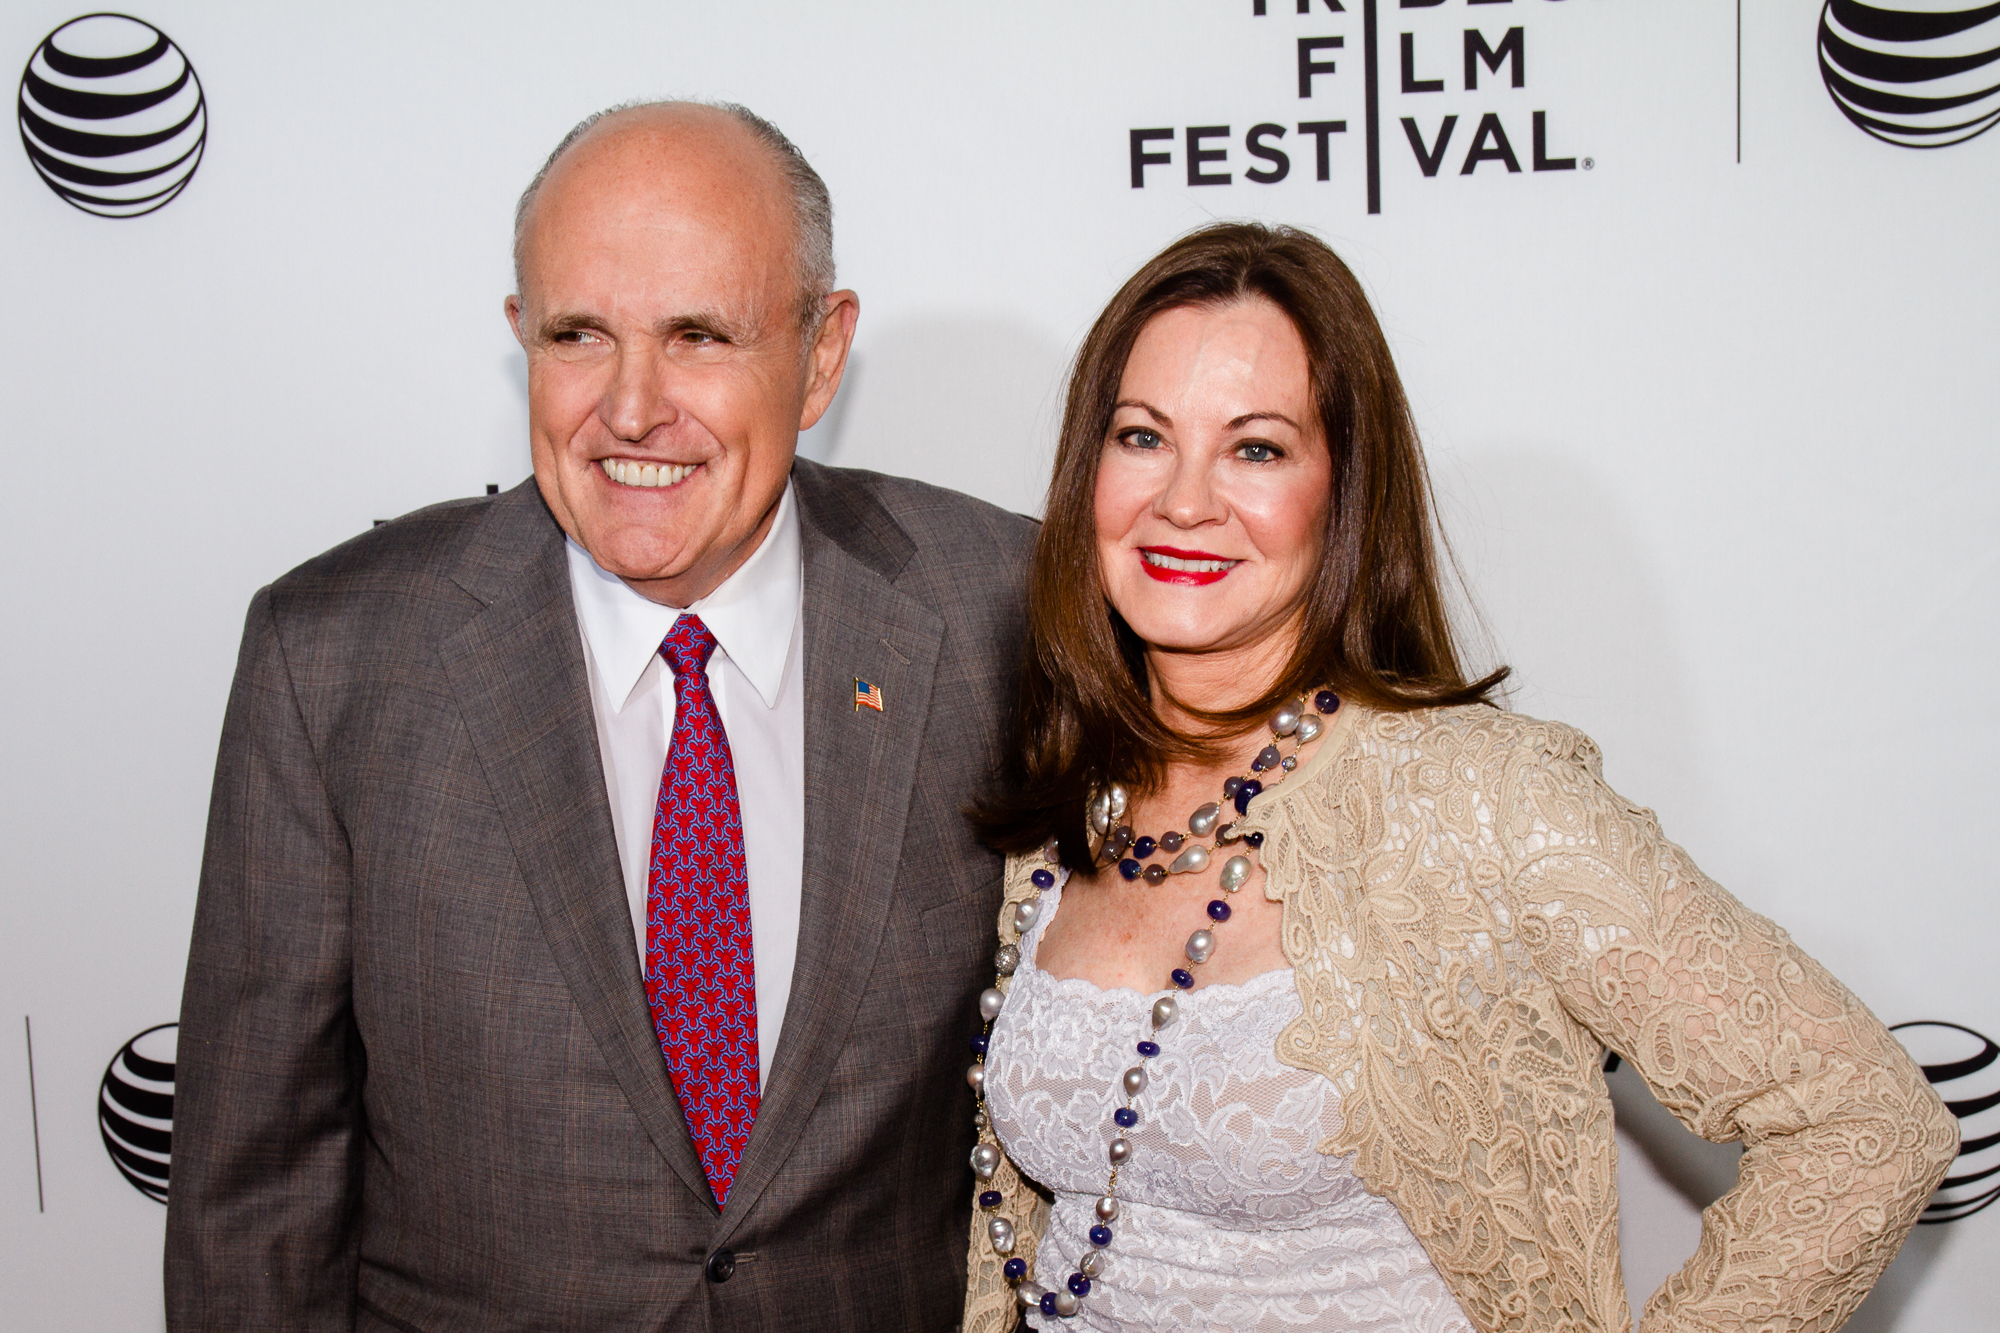 Rudy Giuliani and Judith Giuliani _TribecaFilmFestival_SherrridonPoyer-7148 – YRB ...2000 x 1333